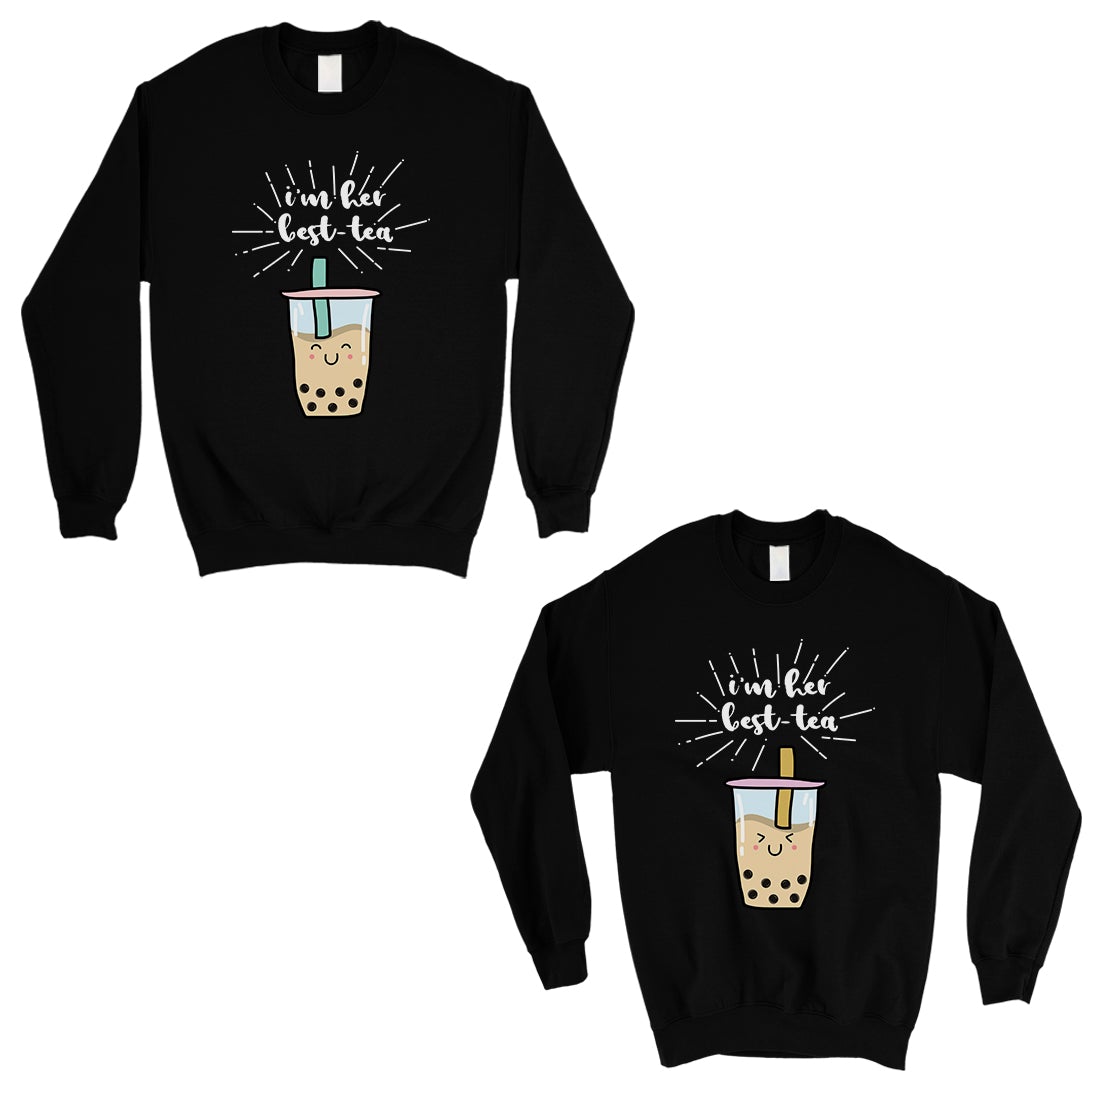 Boba Milk Best-Tea Cute BFF Matching Sweatshirts Birthday Gift Black